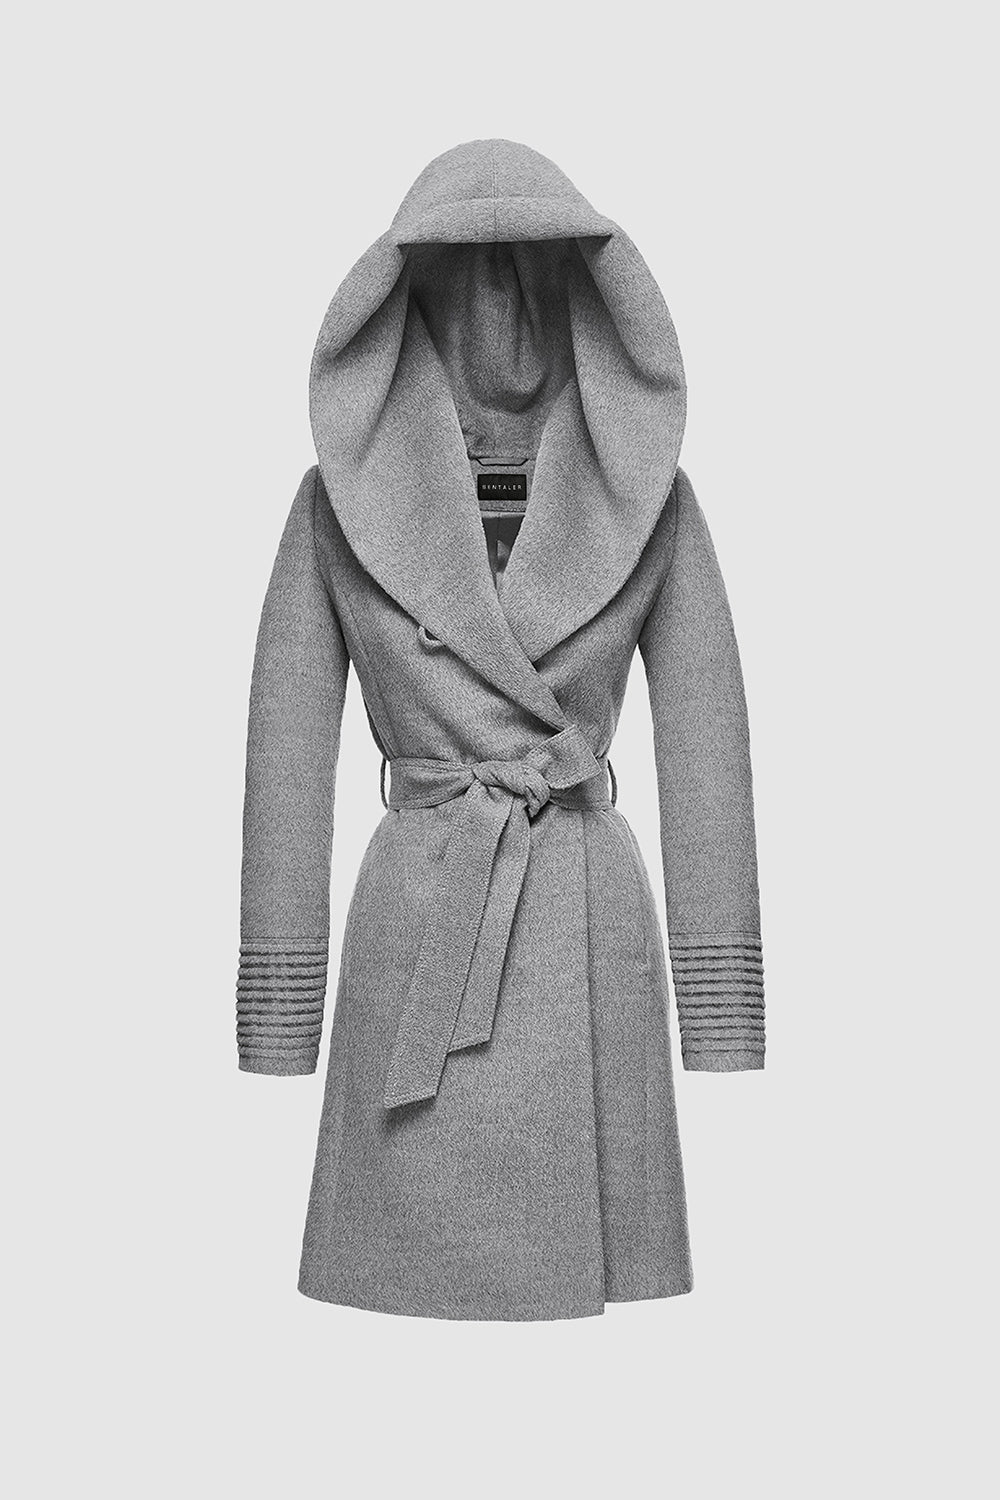  Patch Pocket Belted Hooded Winter Coat (Color : Khaki